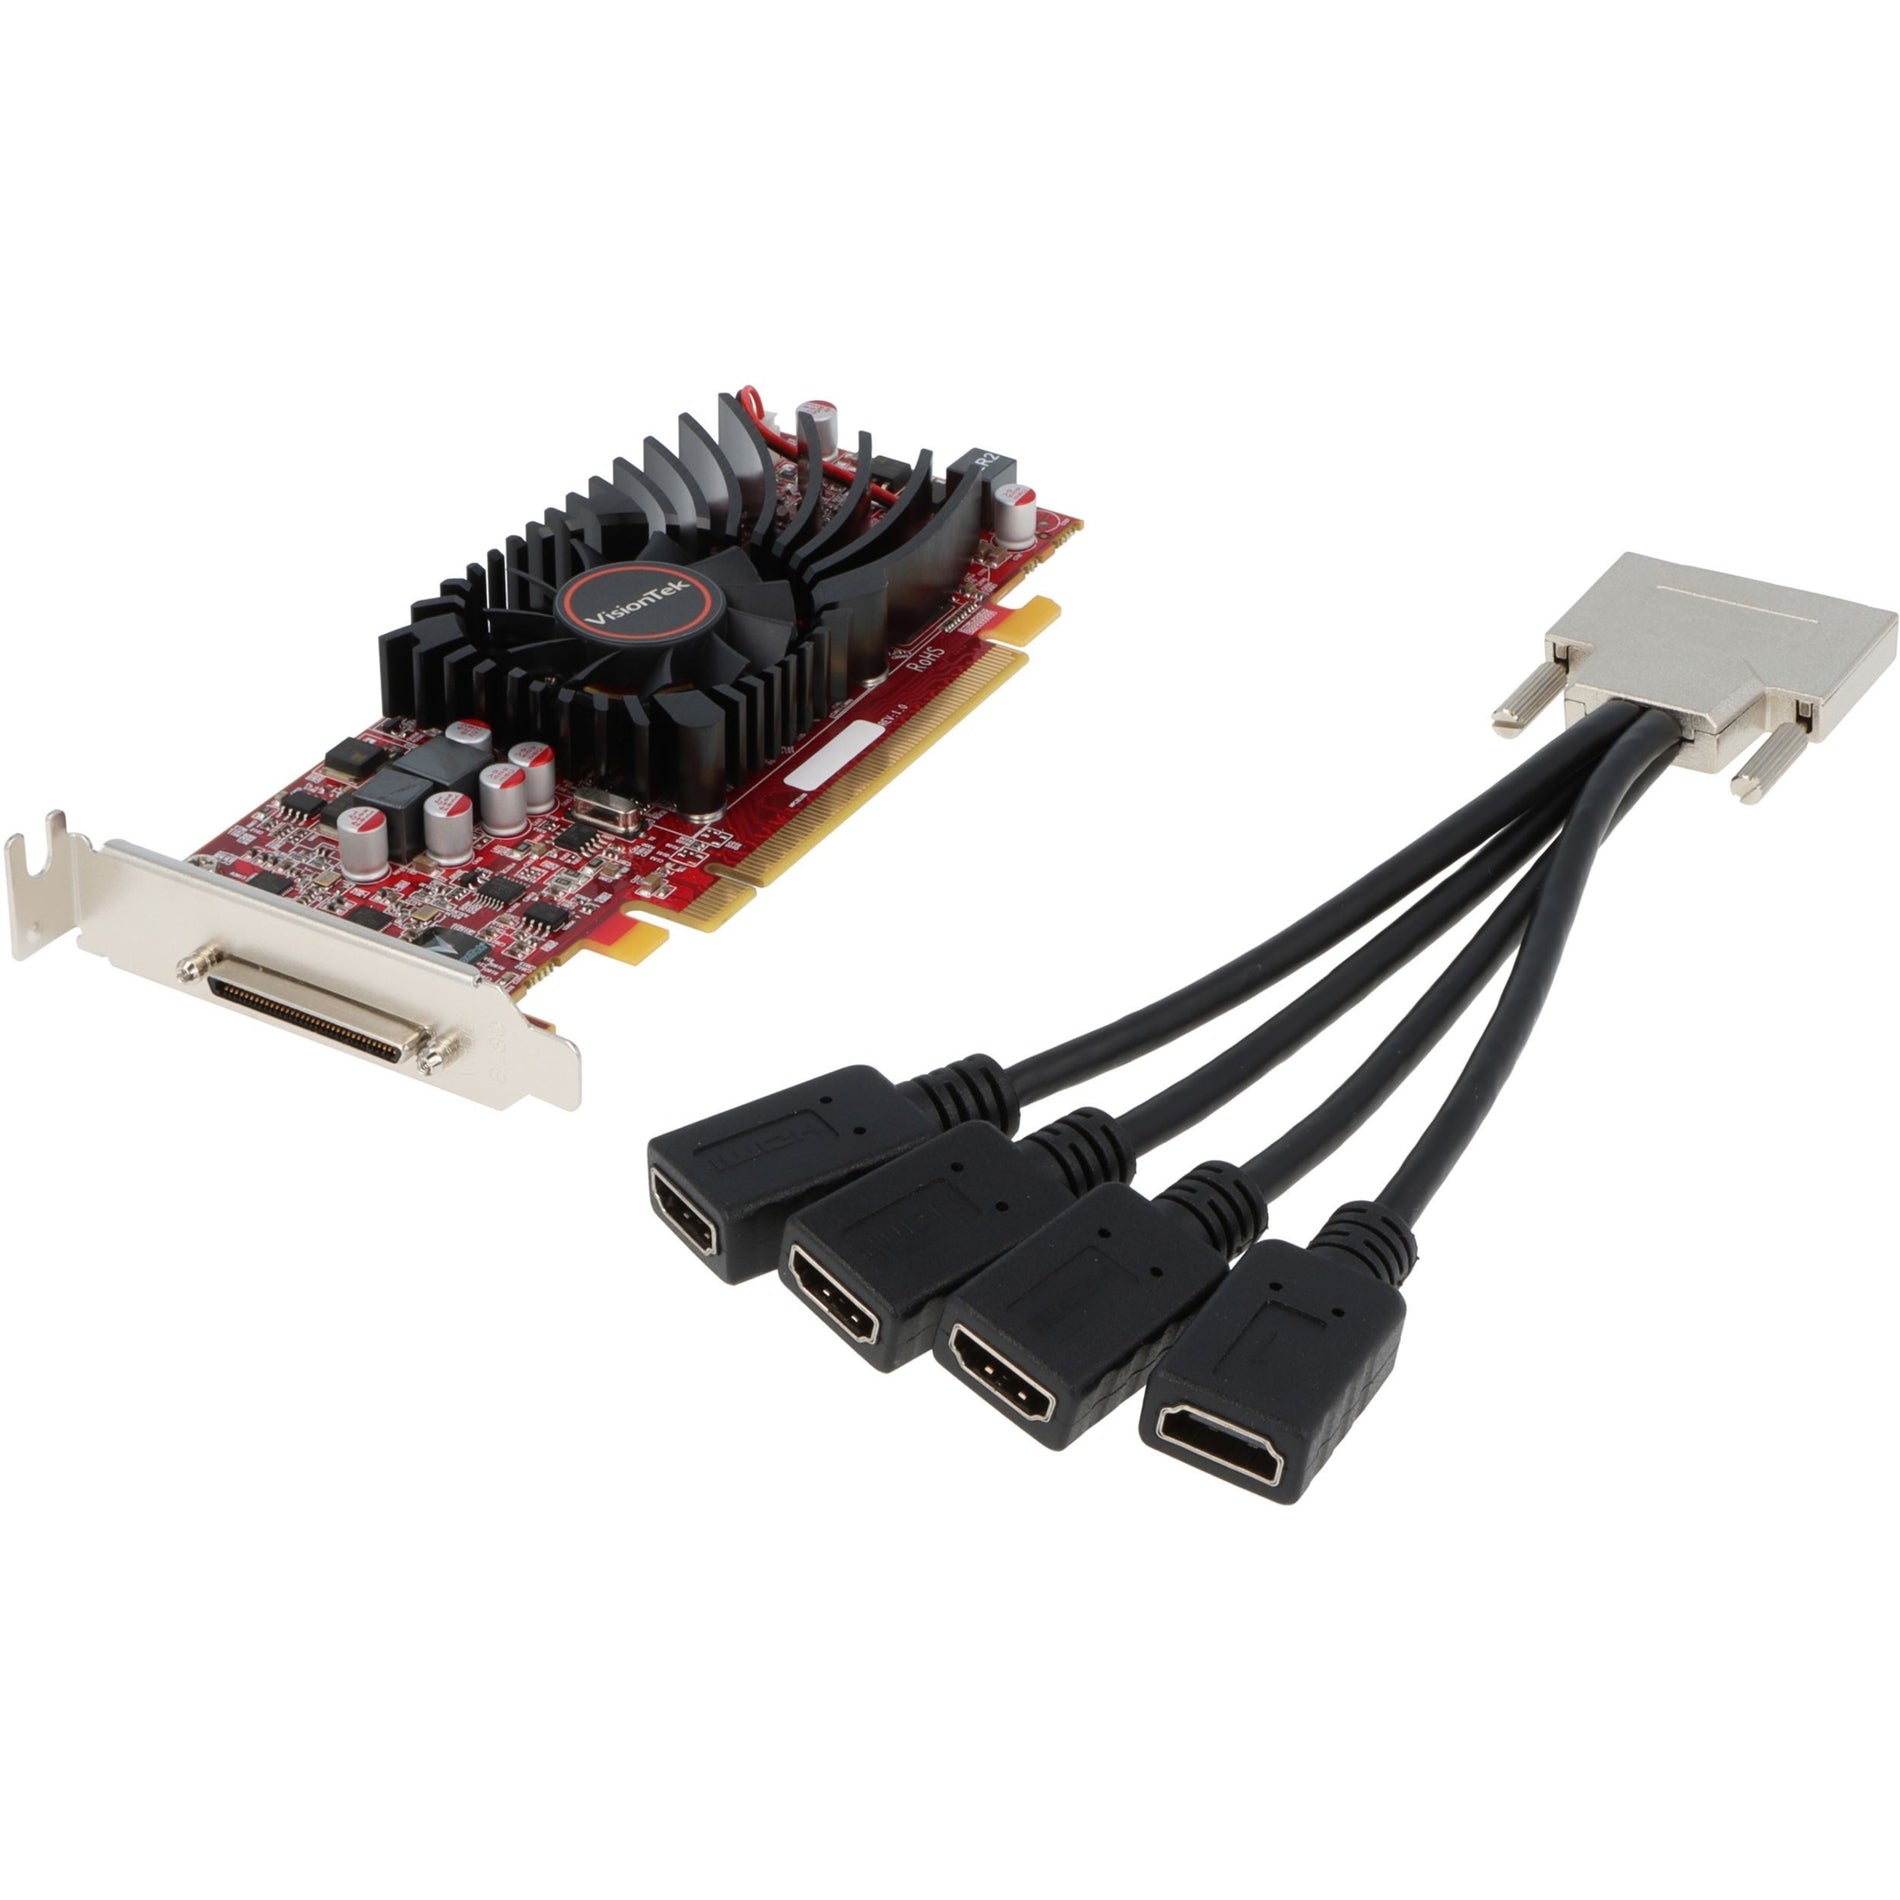 VisionTek 900901 AMD Radeon HD 5570 Graphic Card, 1GB DDR3, 4M VHDCI HDMI (4x HDMI)